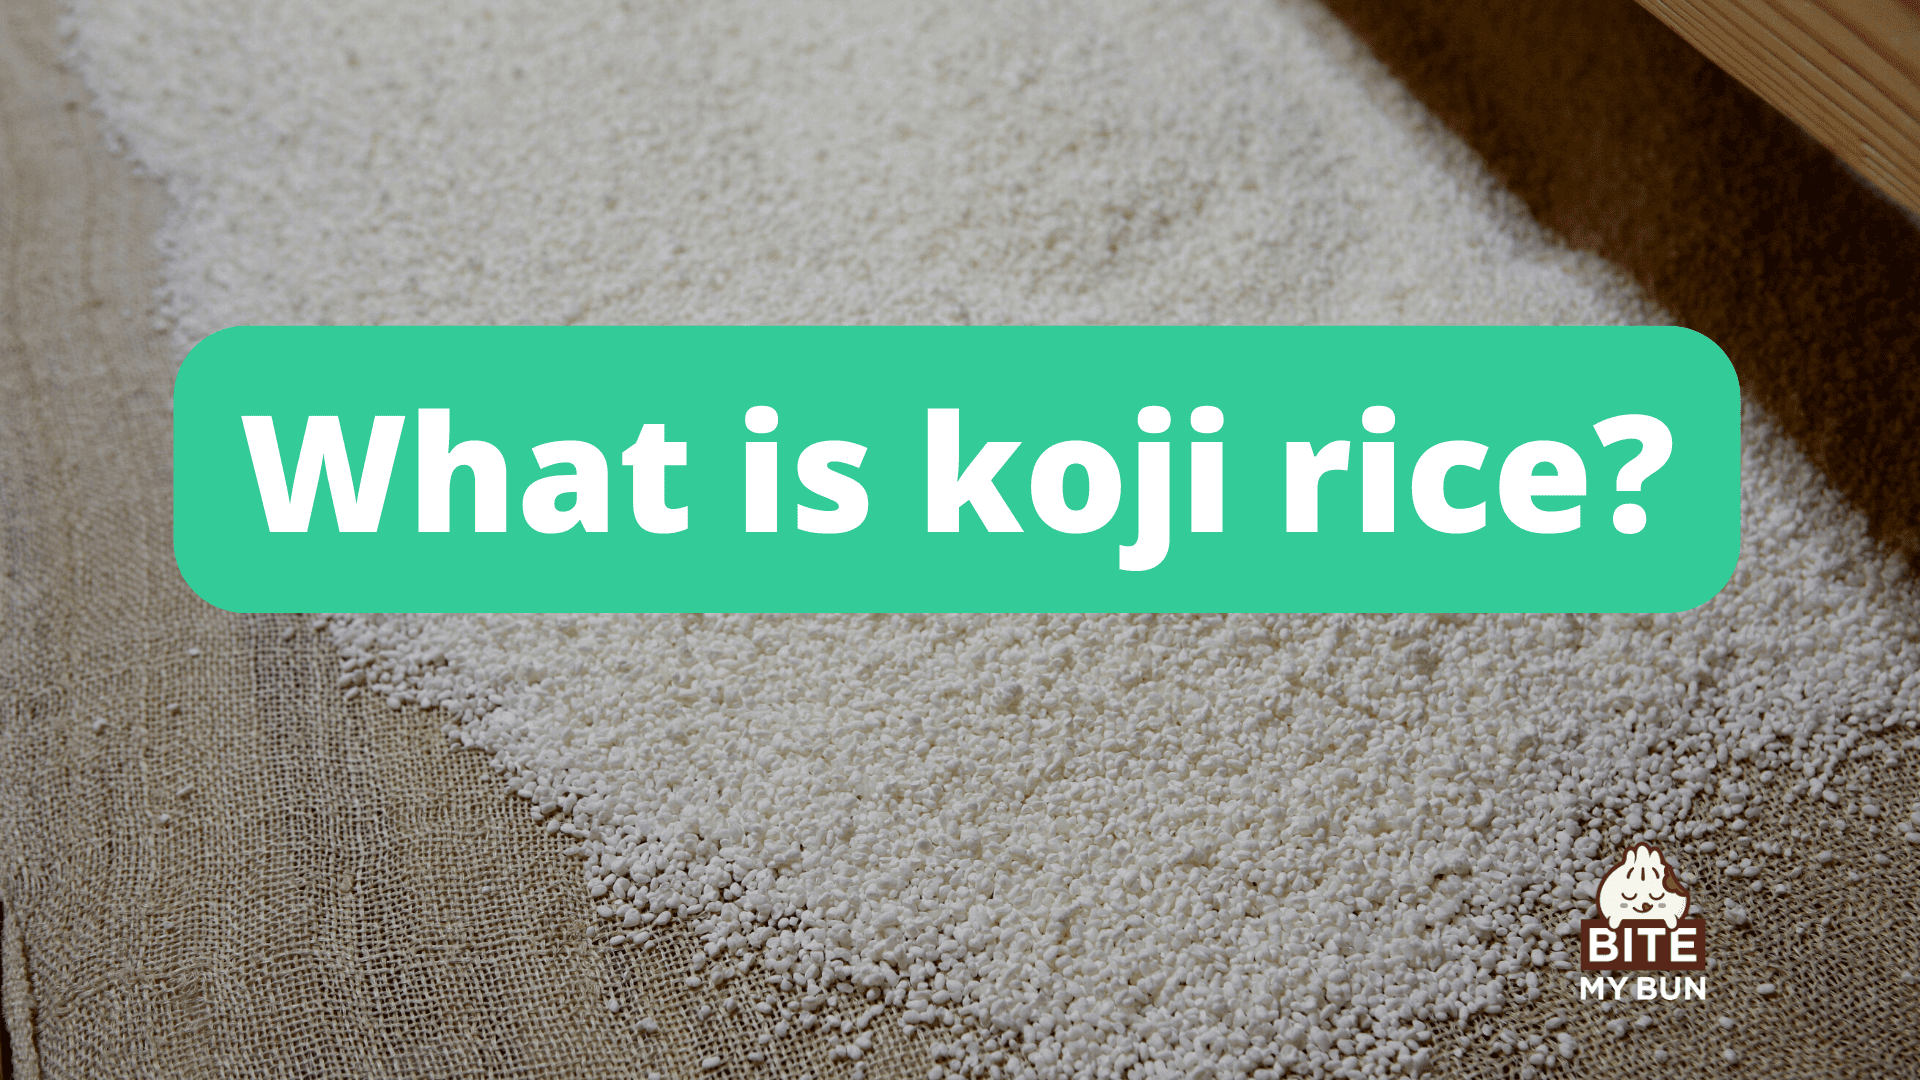 Arroz koji | Guía completa del arroz japonés fermentado especial